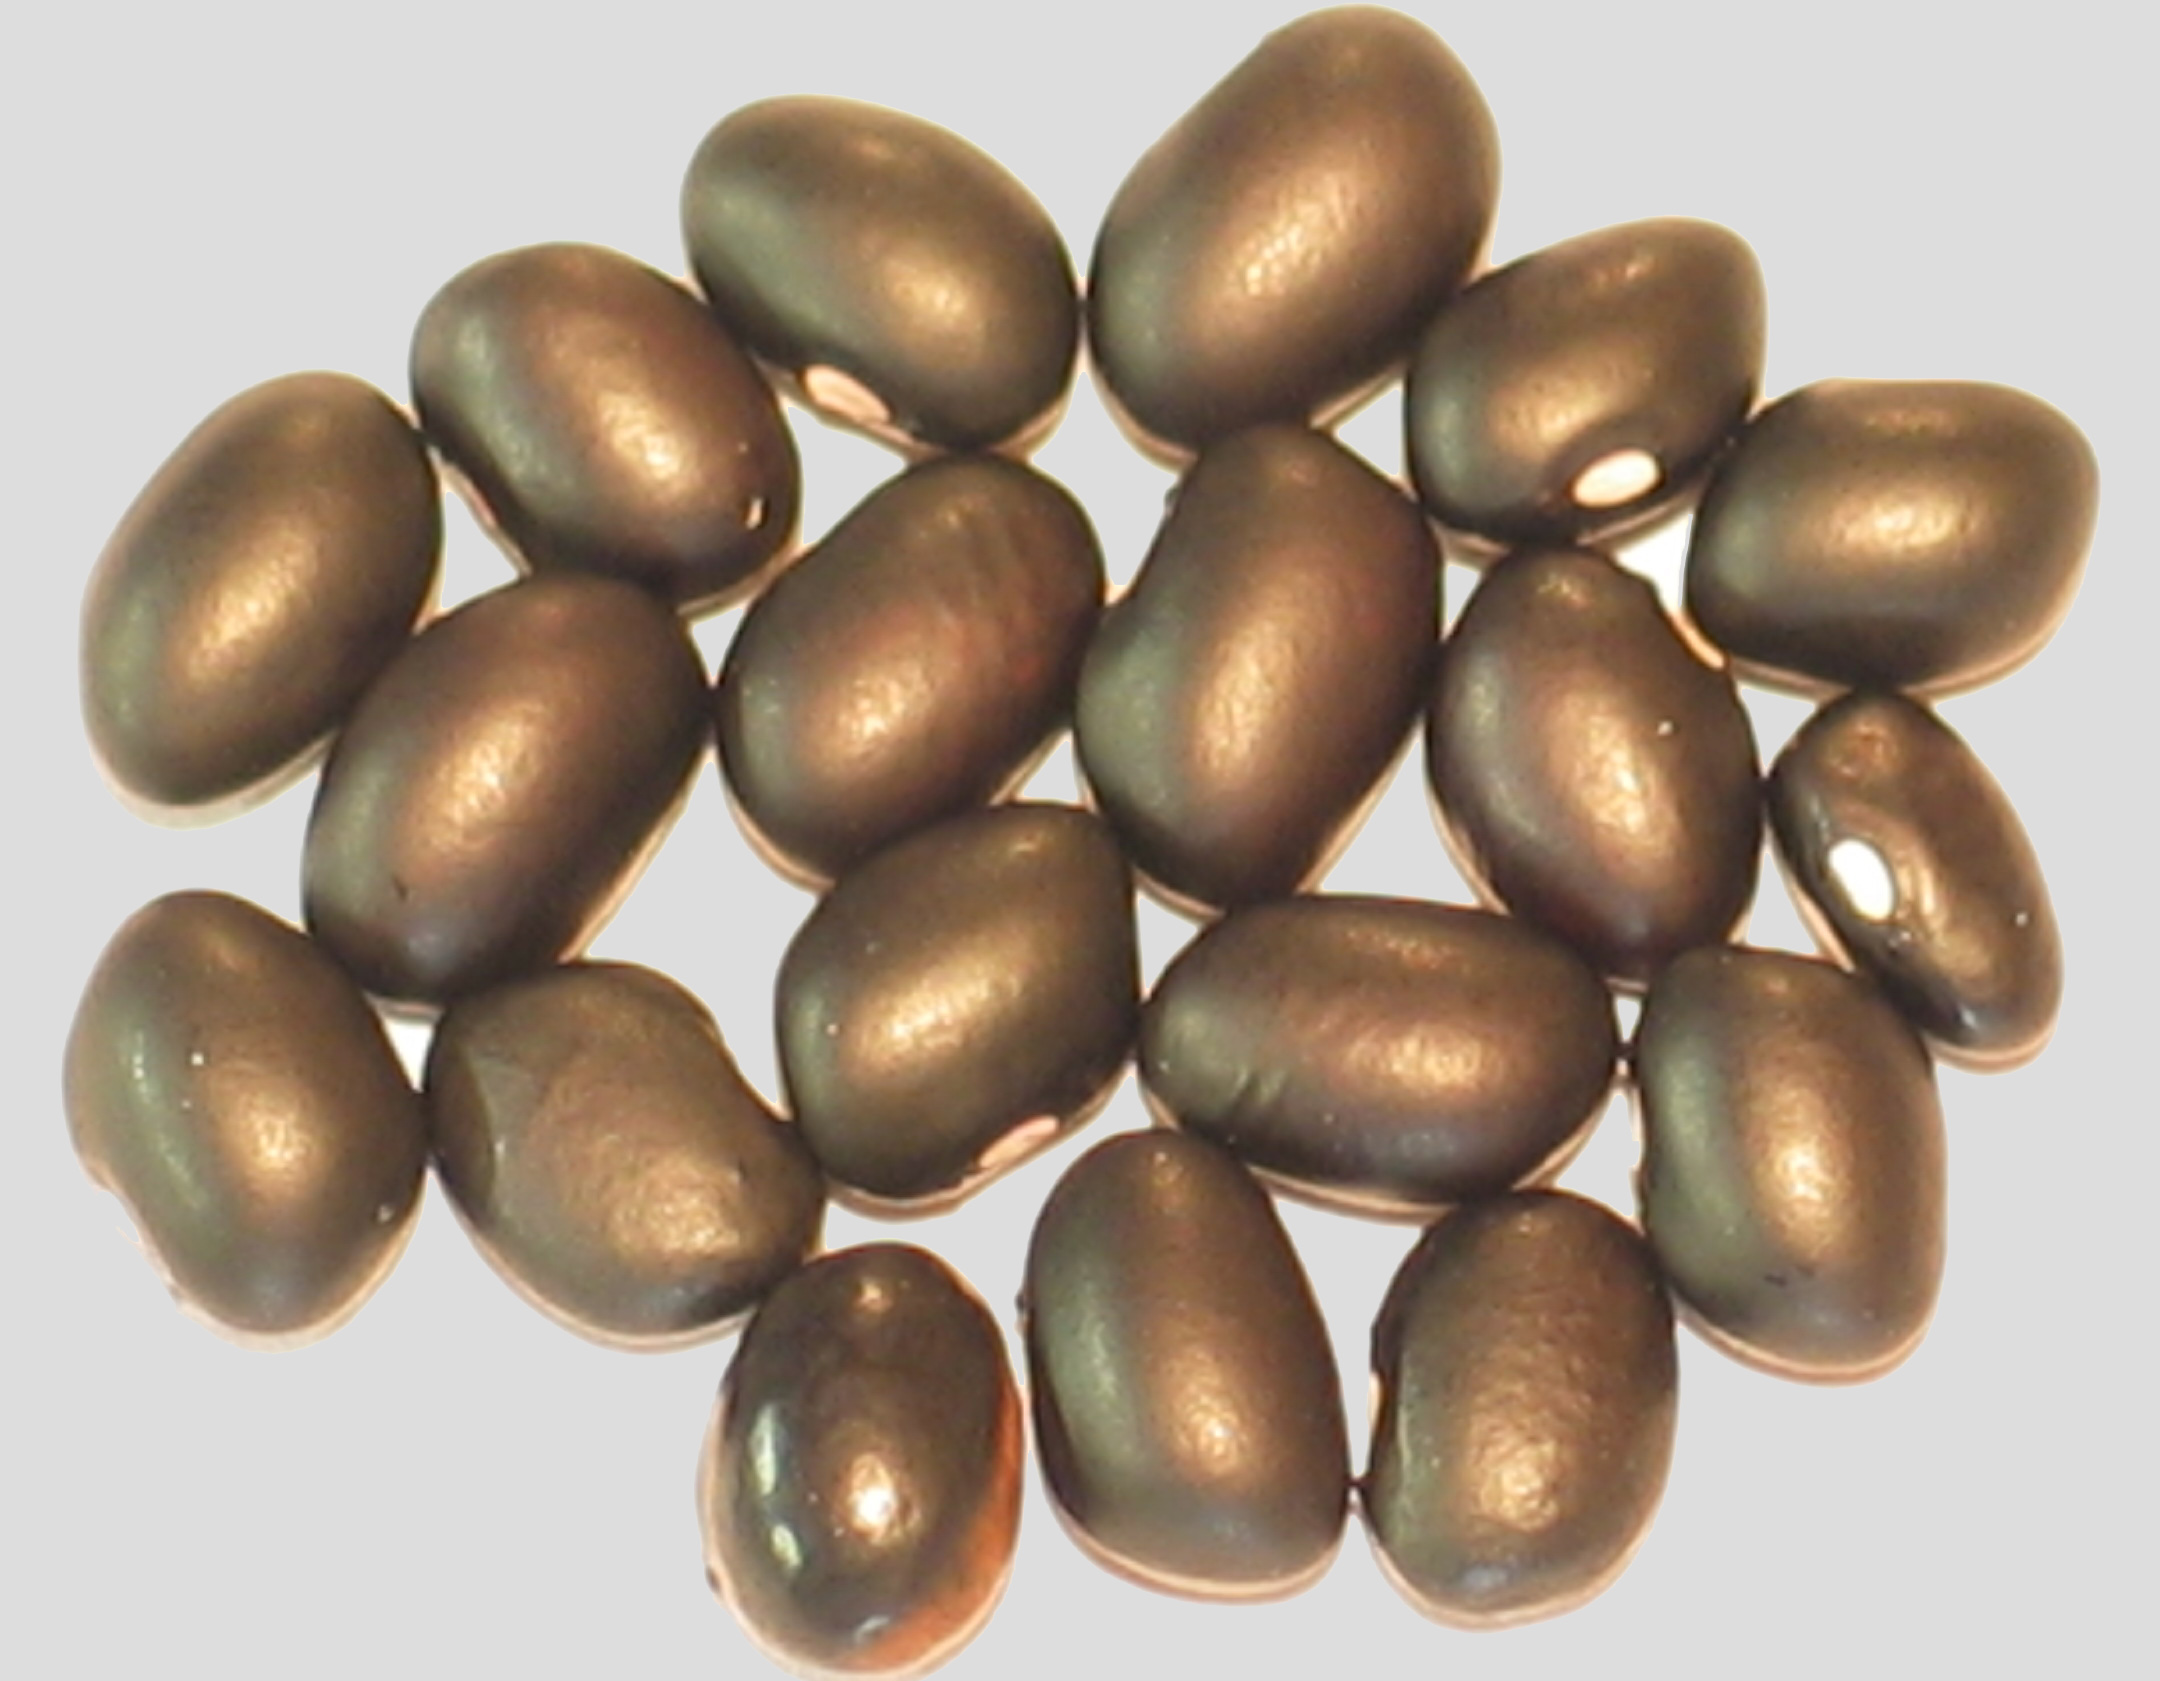 image of Brazilian Black beans